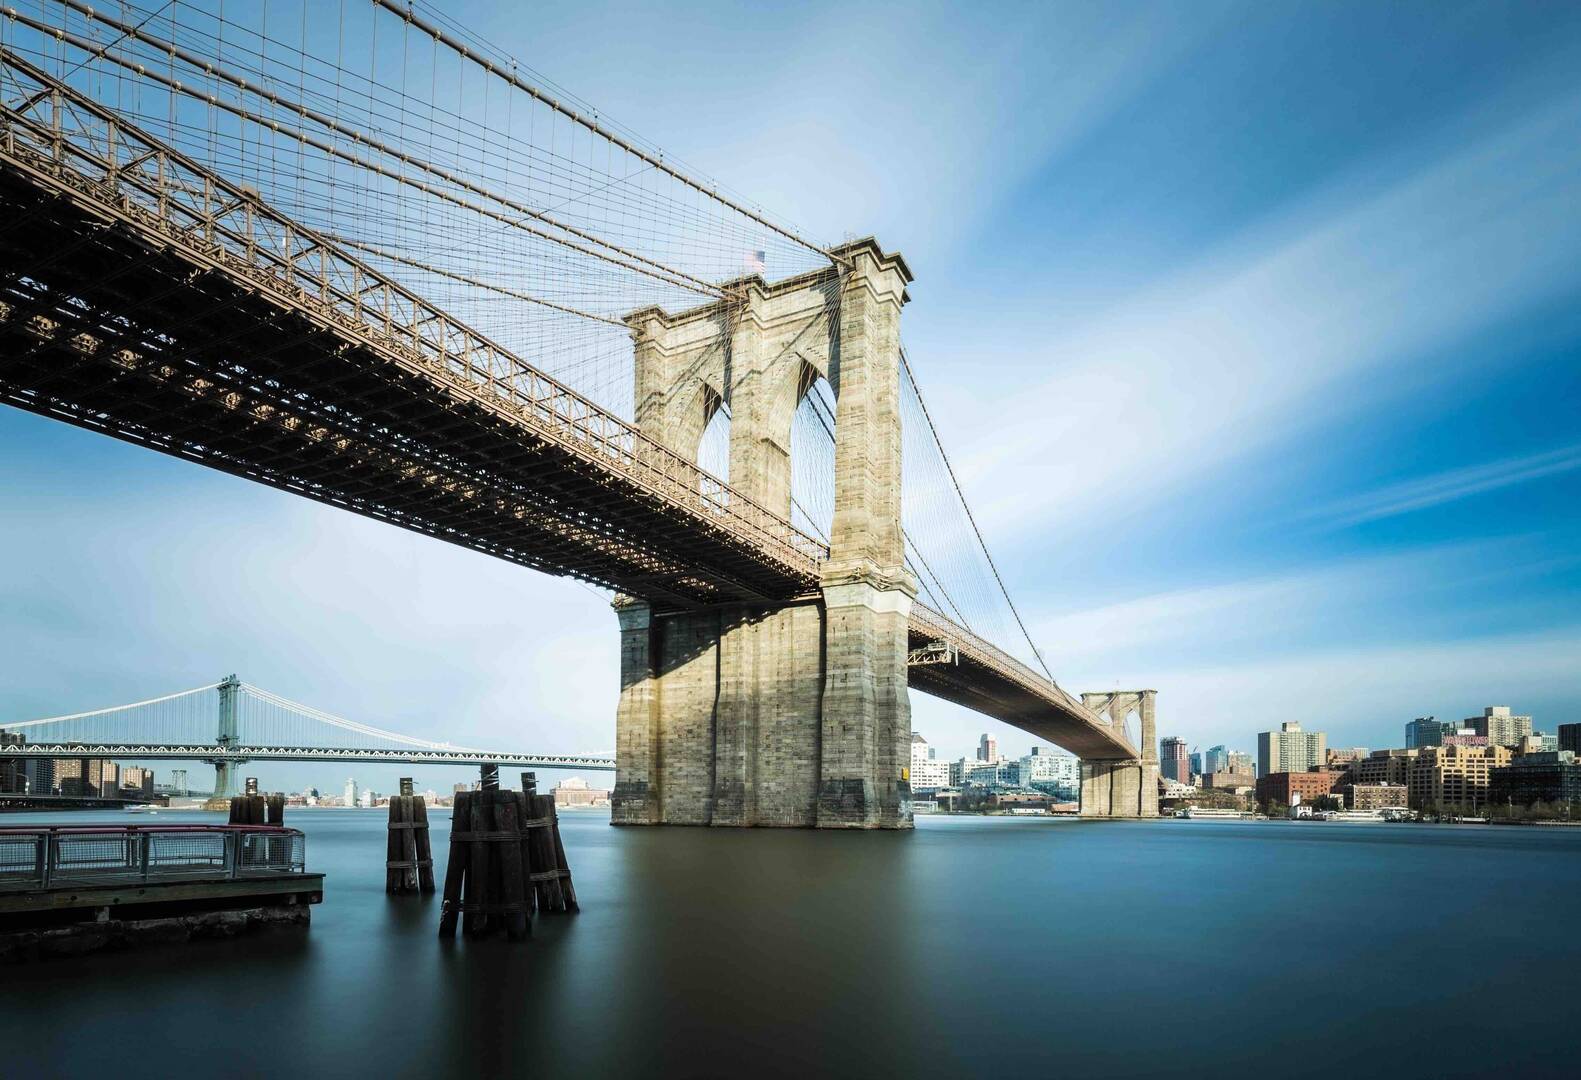 The Brooklyn Bridge (Photo by Alexander Rotker on Unsplash)